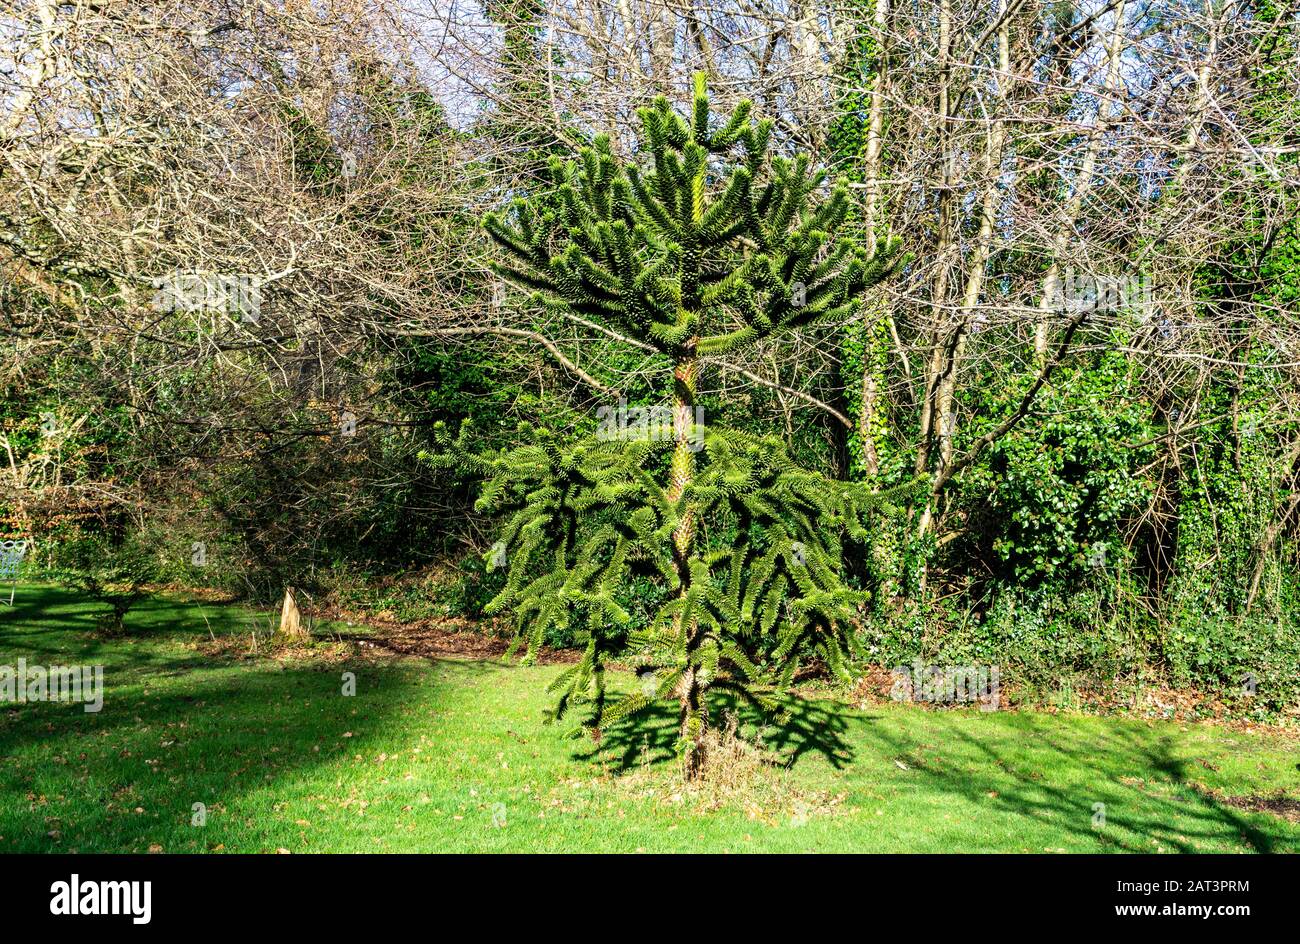 A  Monkey Puzzle Tree, Araucaria Araucana, seen here in a parkland setting. Stock Photo